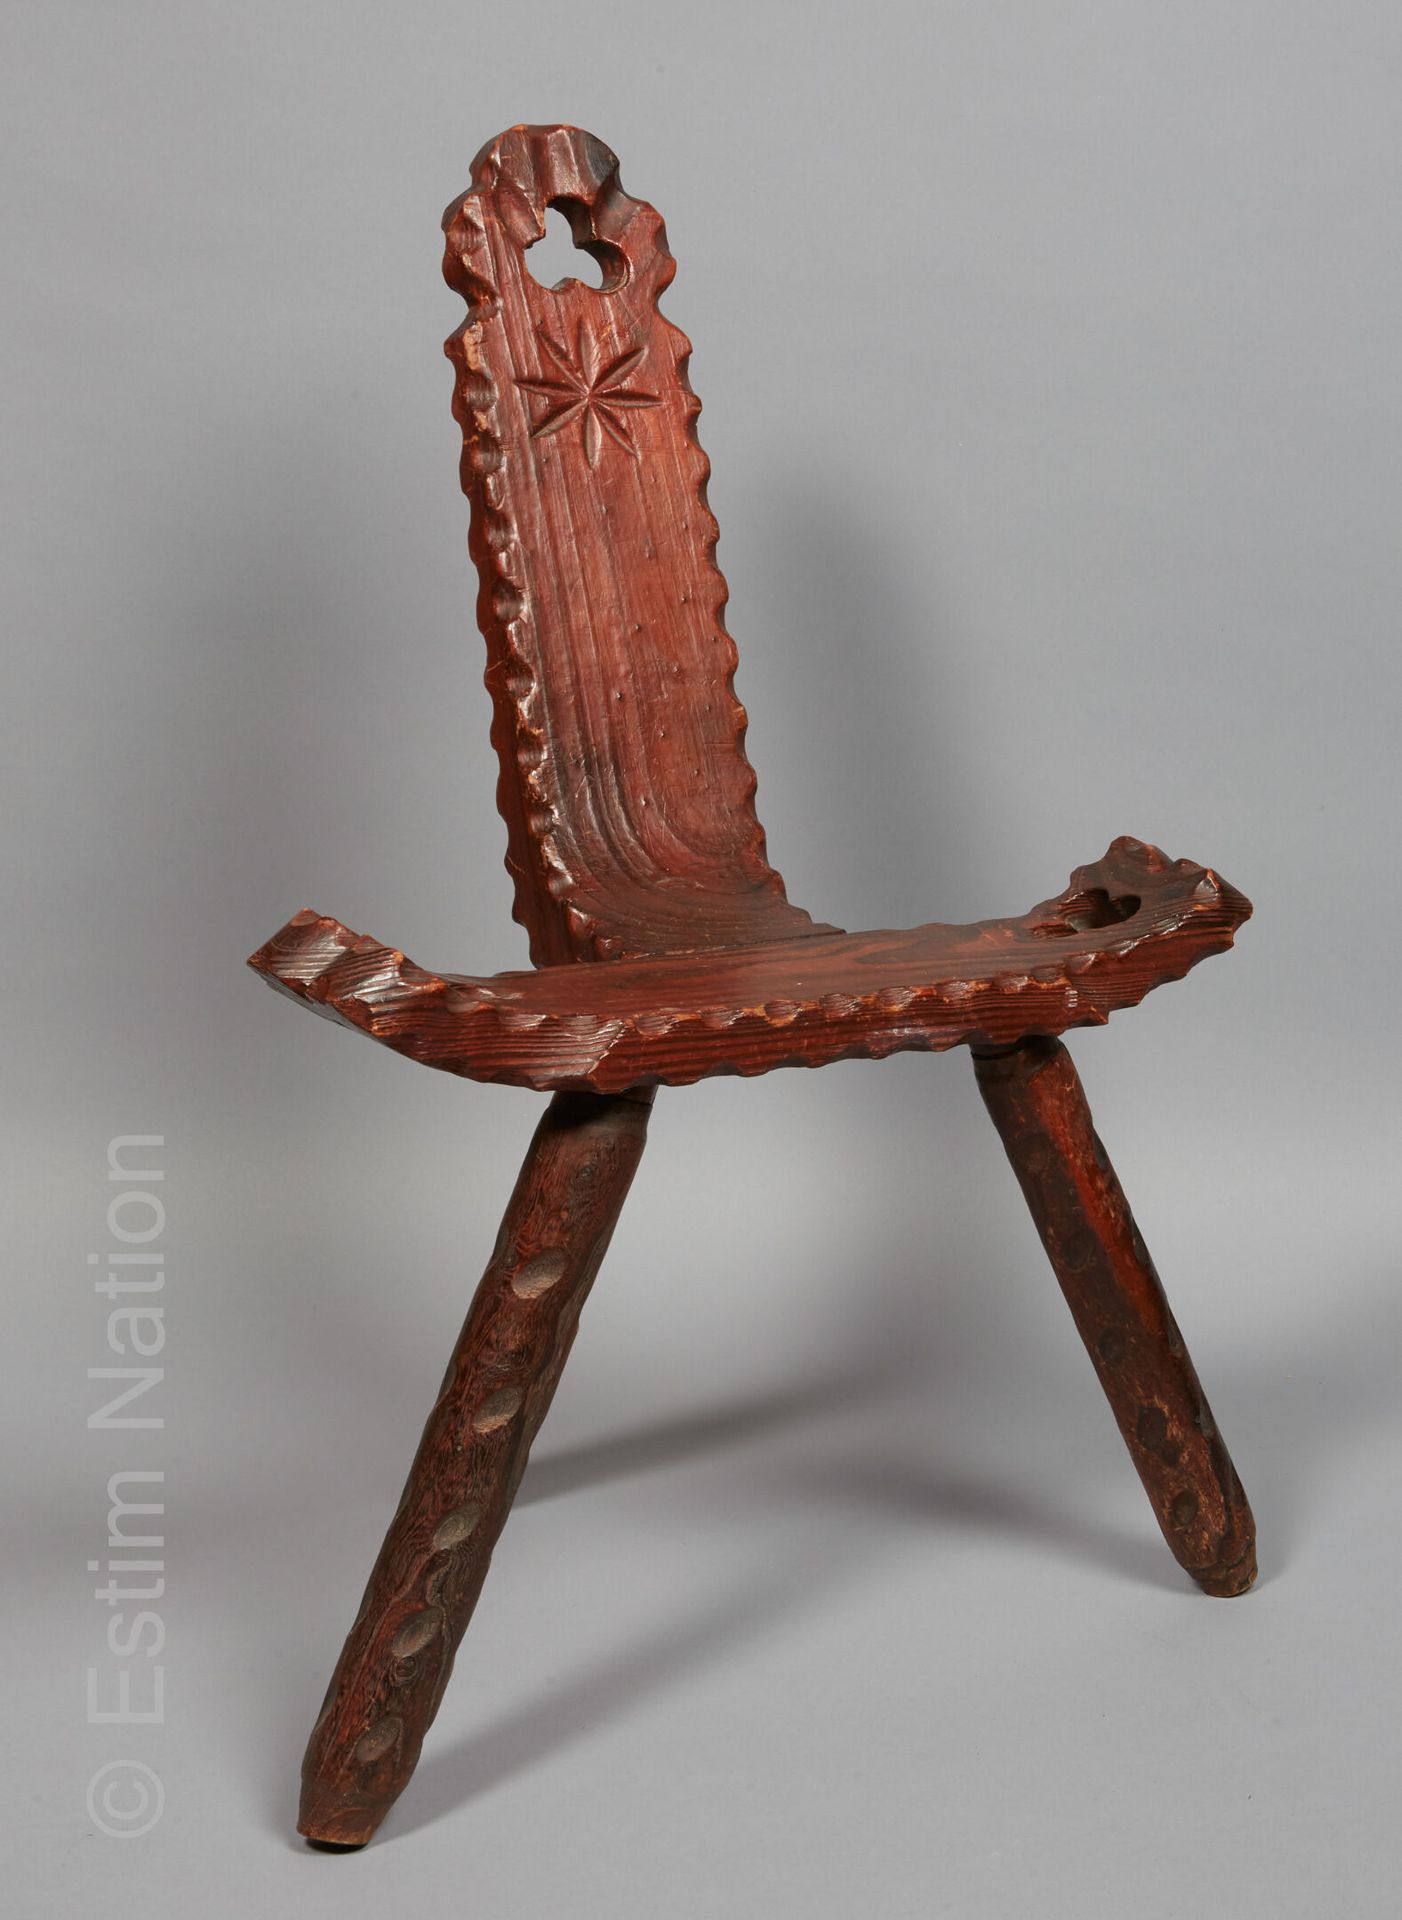 ART POPULAIRE 雕刻的天然木制三角椅，镂空的椅背上装饰着三叶形的图案和雕刻的星星。

座椅是镂空的，有两个三叶草的图案，靠在三个带凹槽的脚上。

布&hellip;